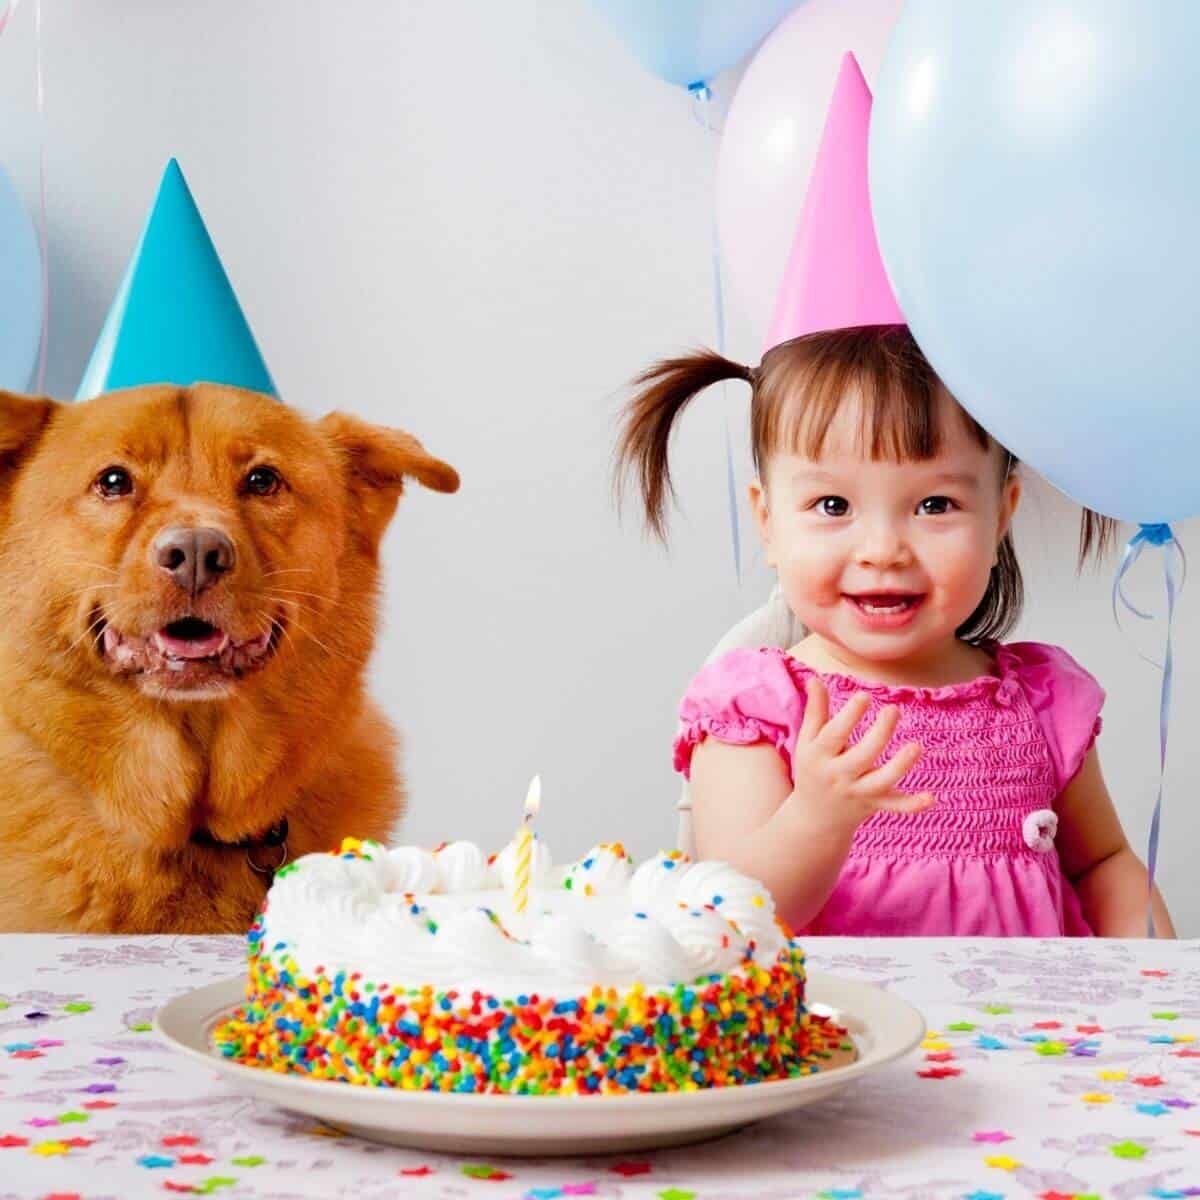 Toddler, Dog, and Birthday Cake